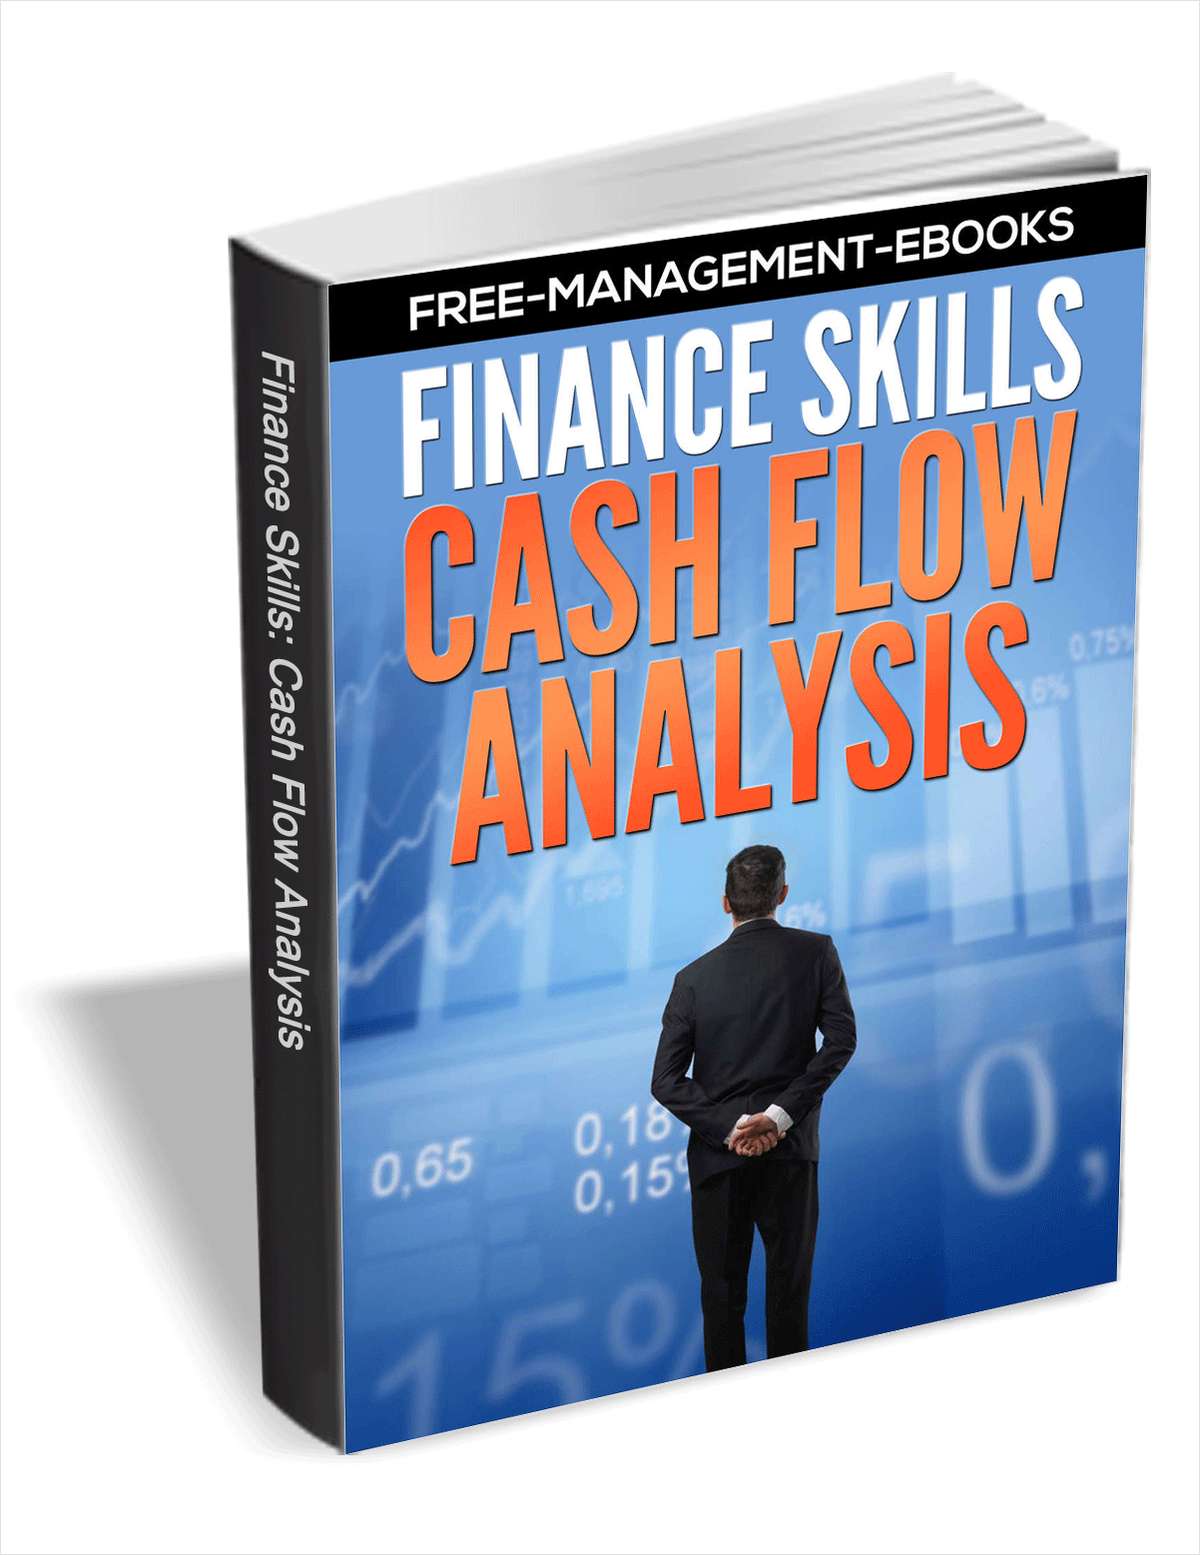 Cash Flow Analysis - Developing Your Finance Skills